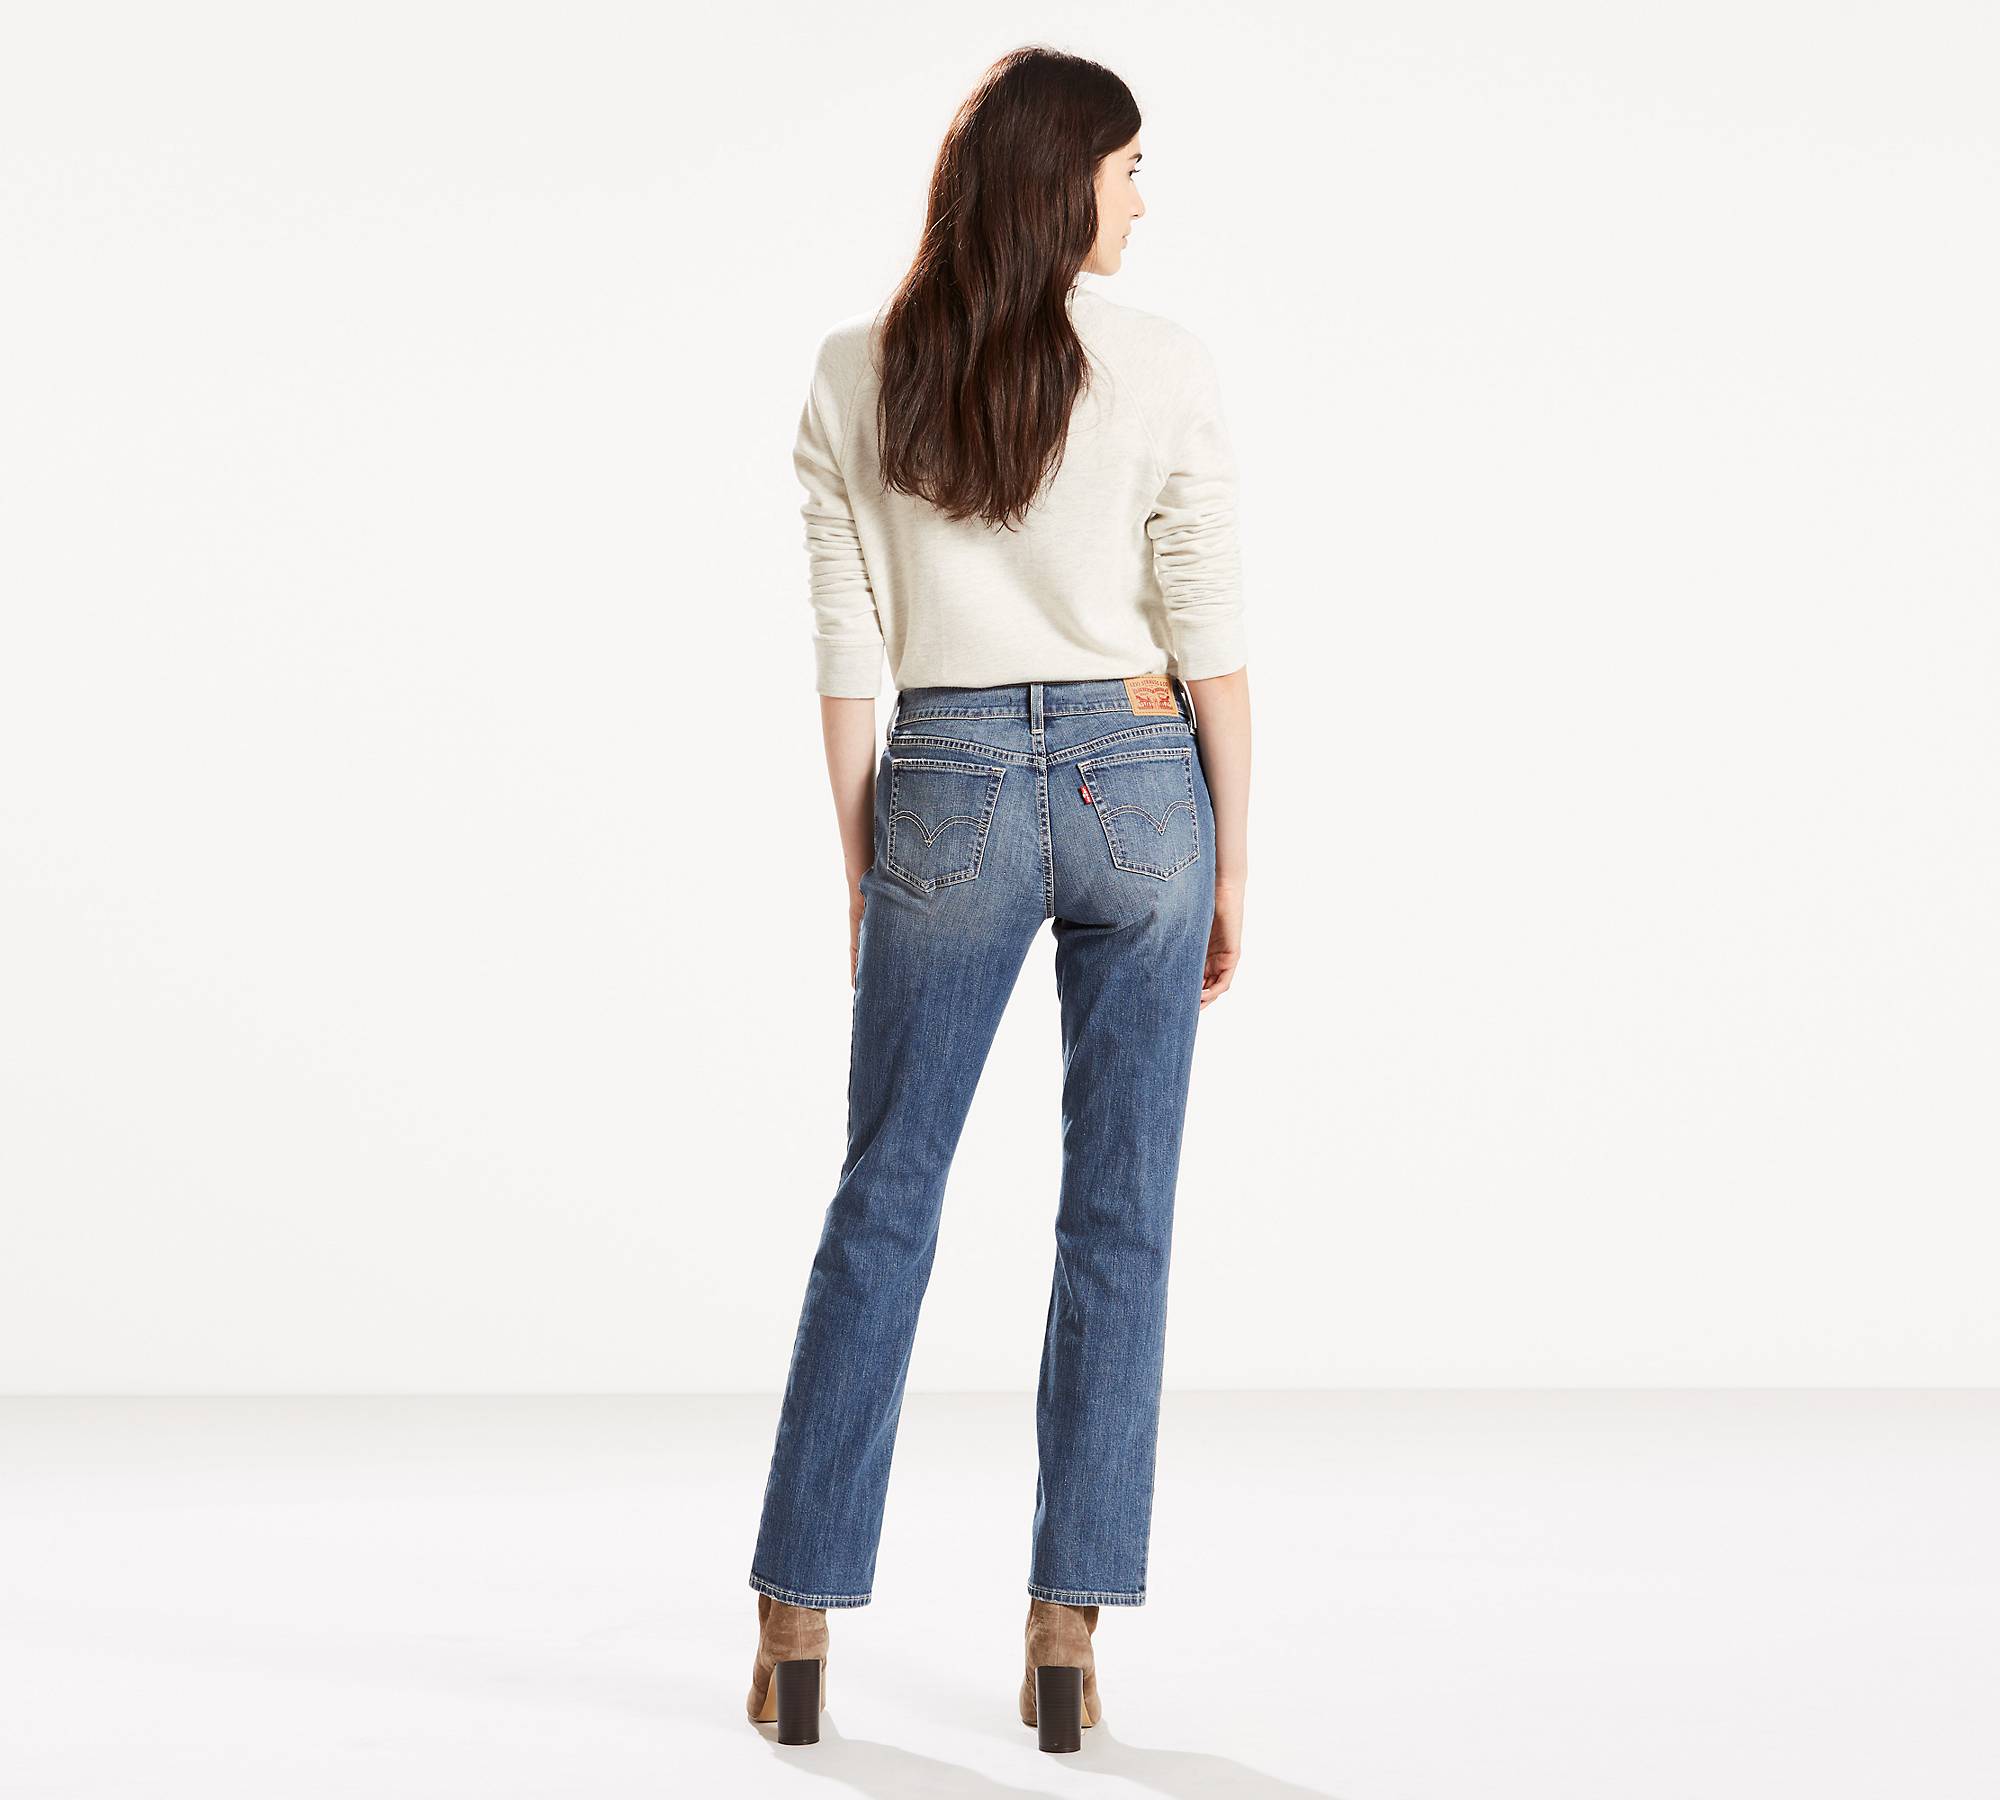 Palads At regere dækning 414 Classic Straight Women's Jeans - Medium Wash | Levi's® US